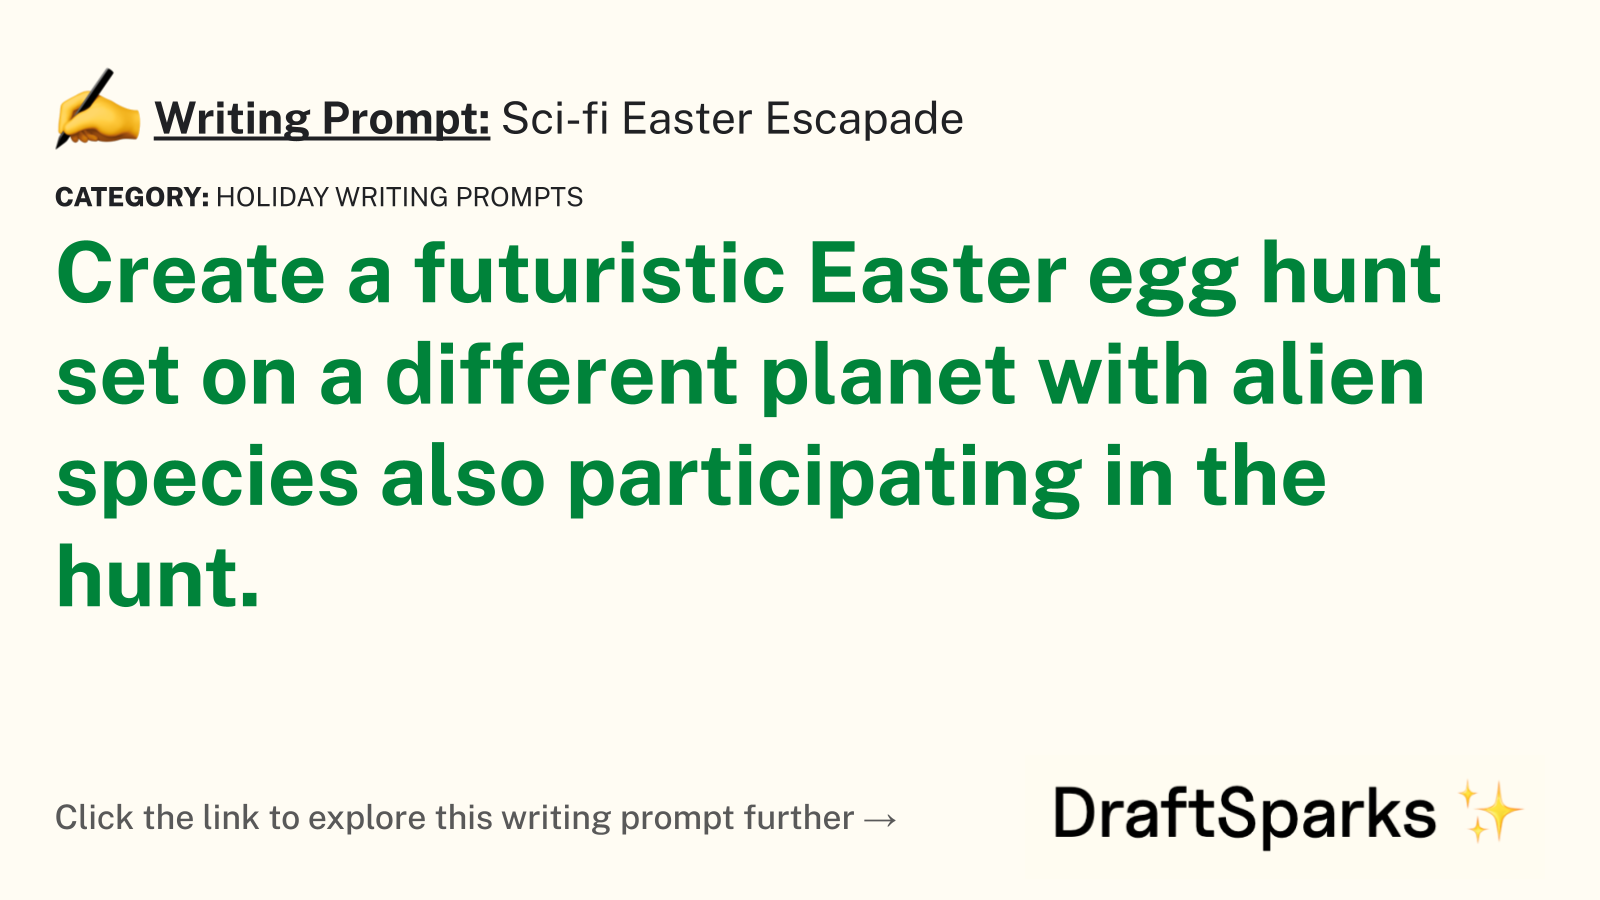 Sci-fi Easter Escapade